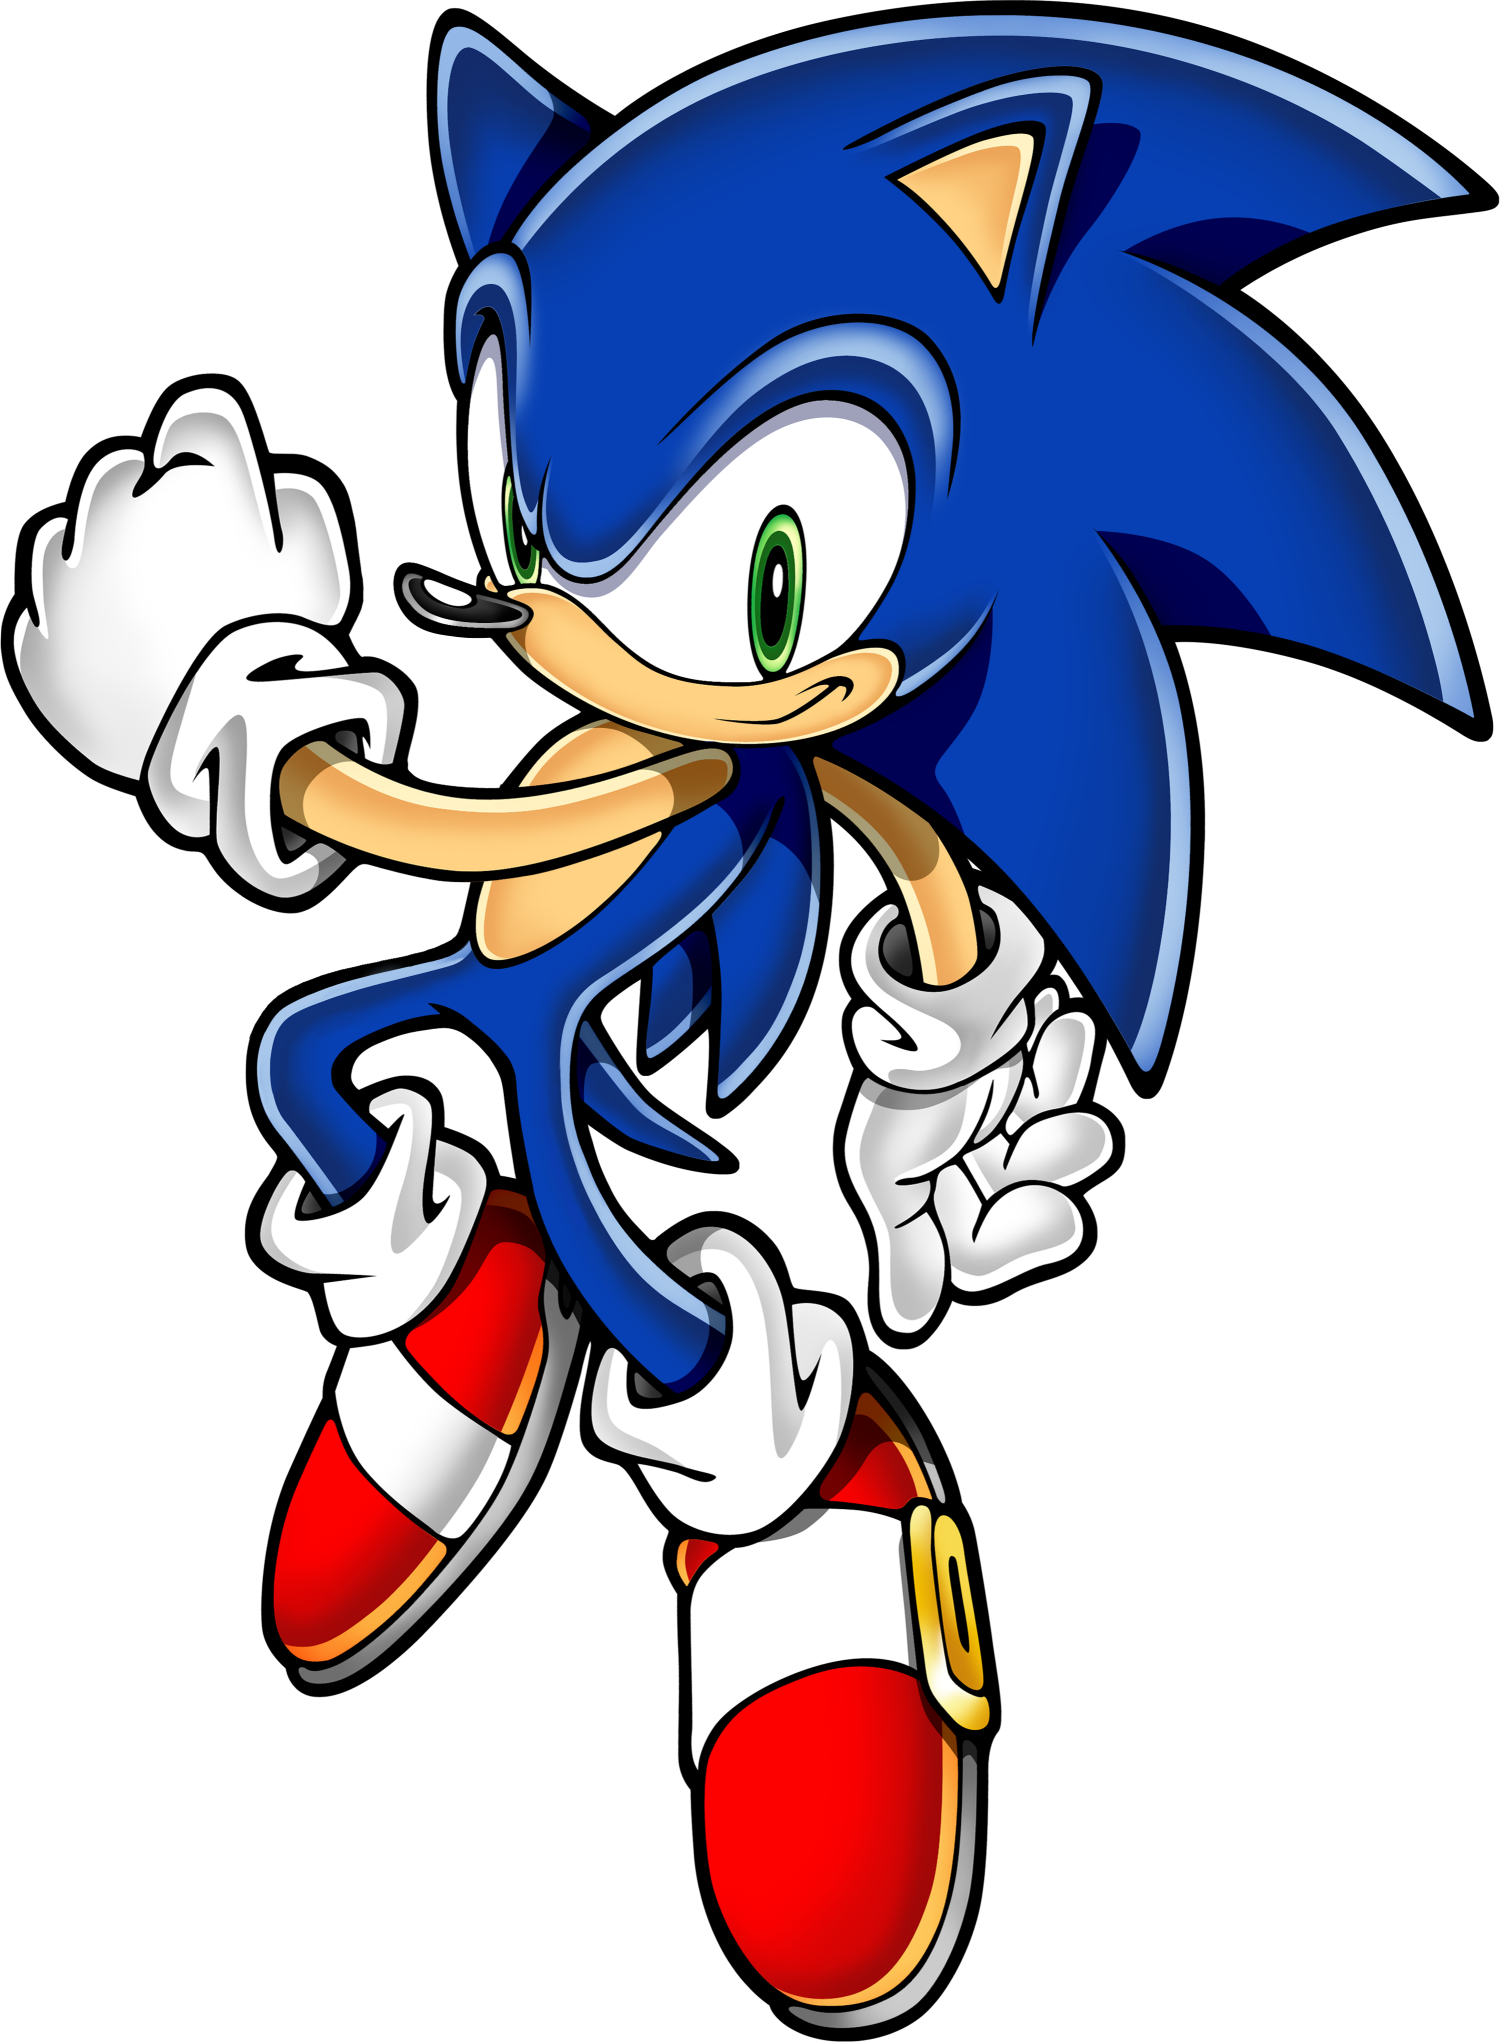 Sonic Art Assets Dvd   Sonic The Hedgehog   15.png - Hedgehog, Transparent background PNG HD thumbnail